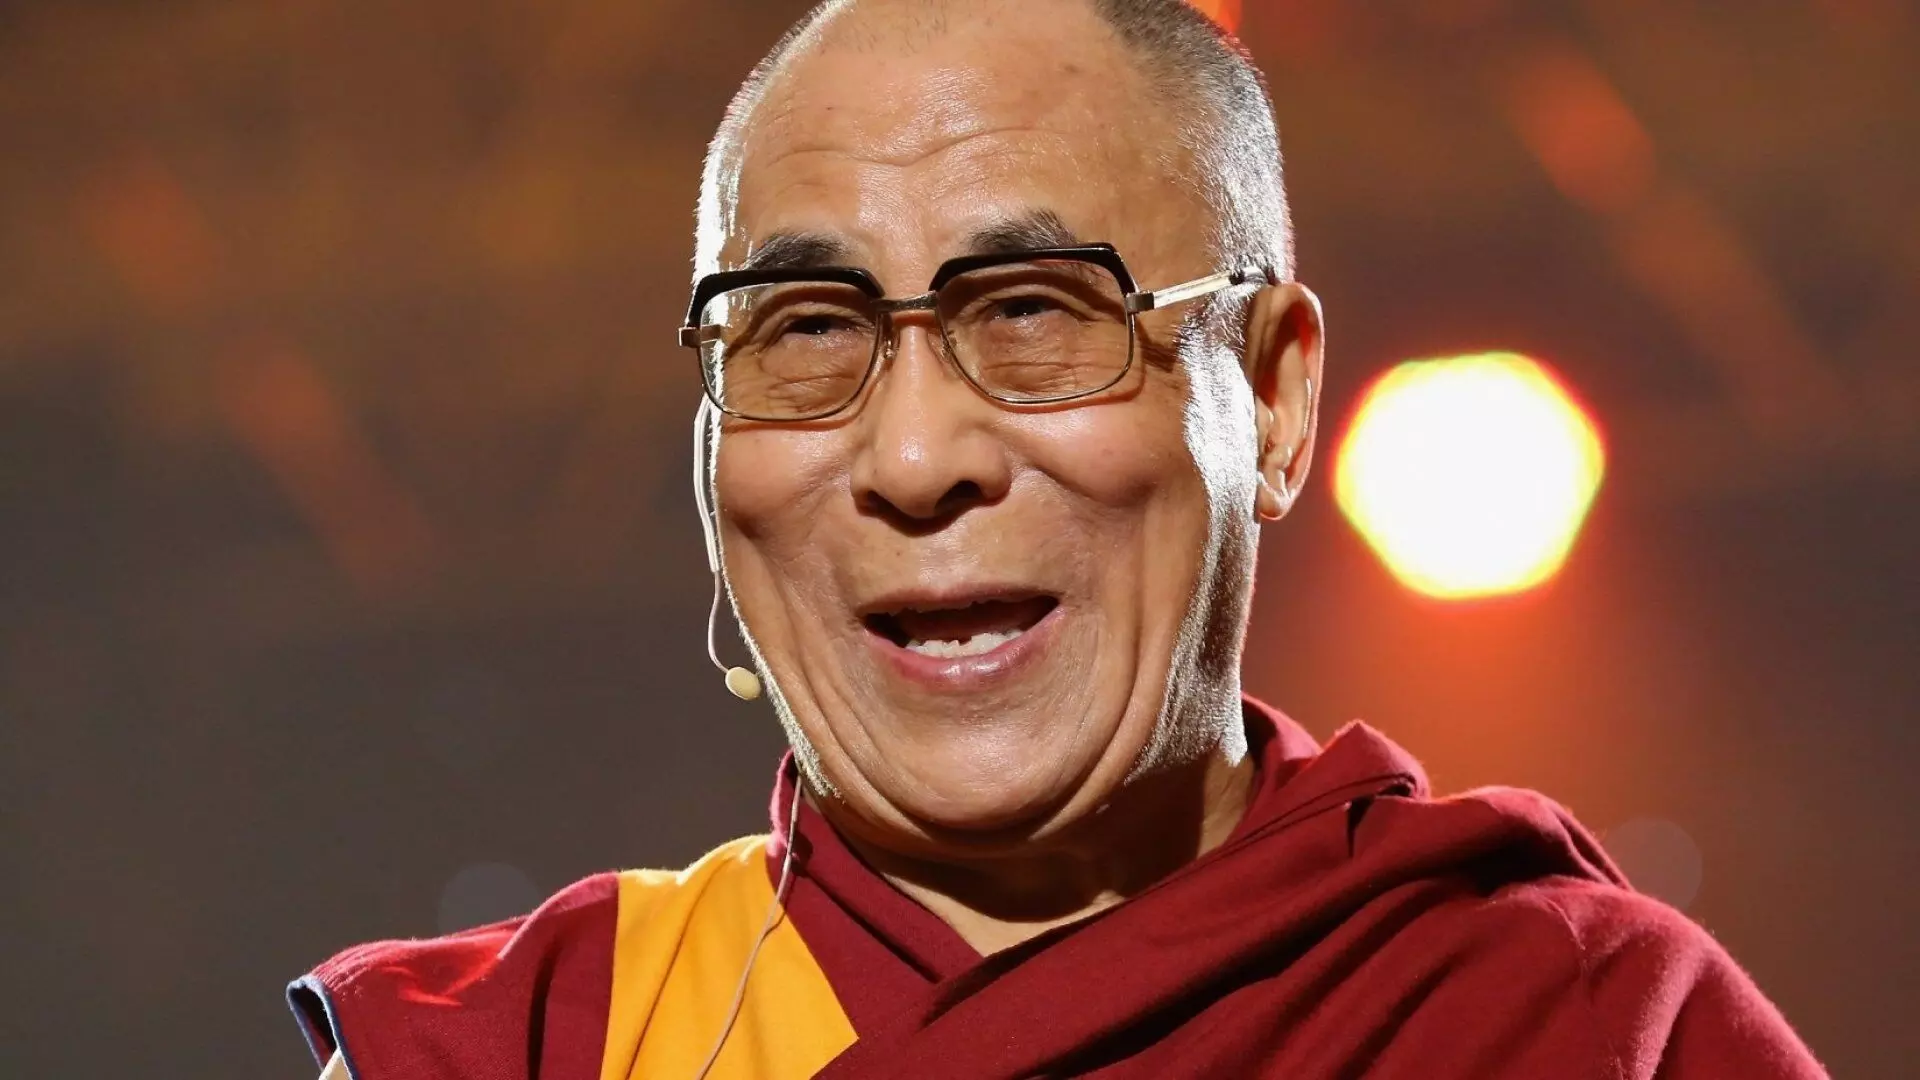 Dalai Lama marks 85th birthday